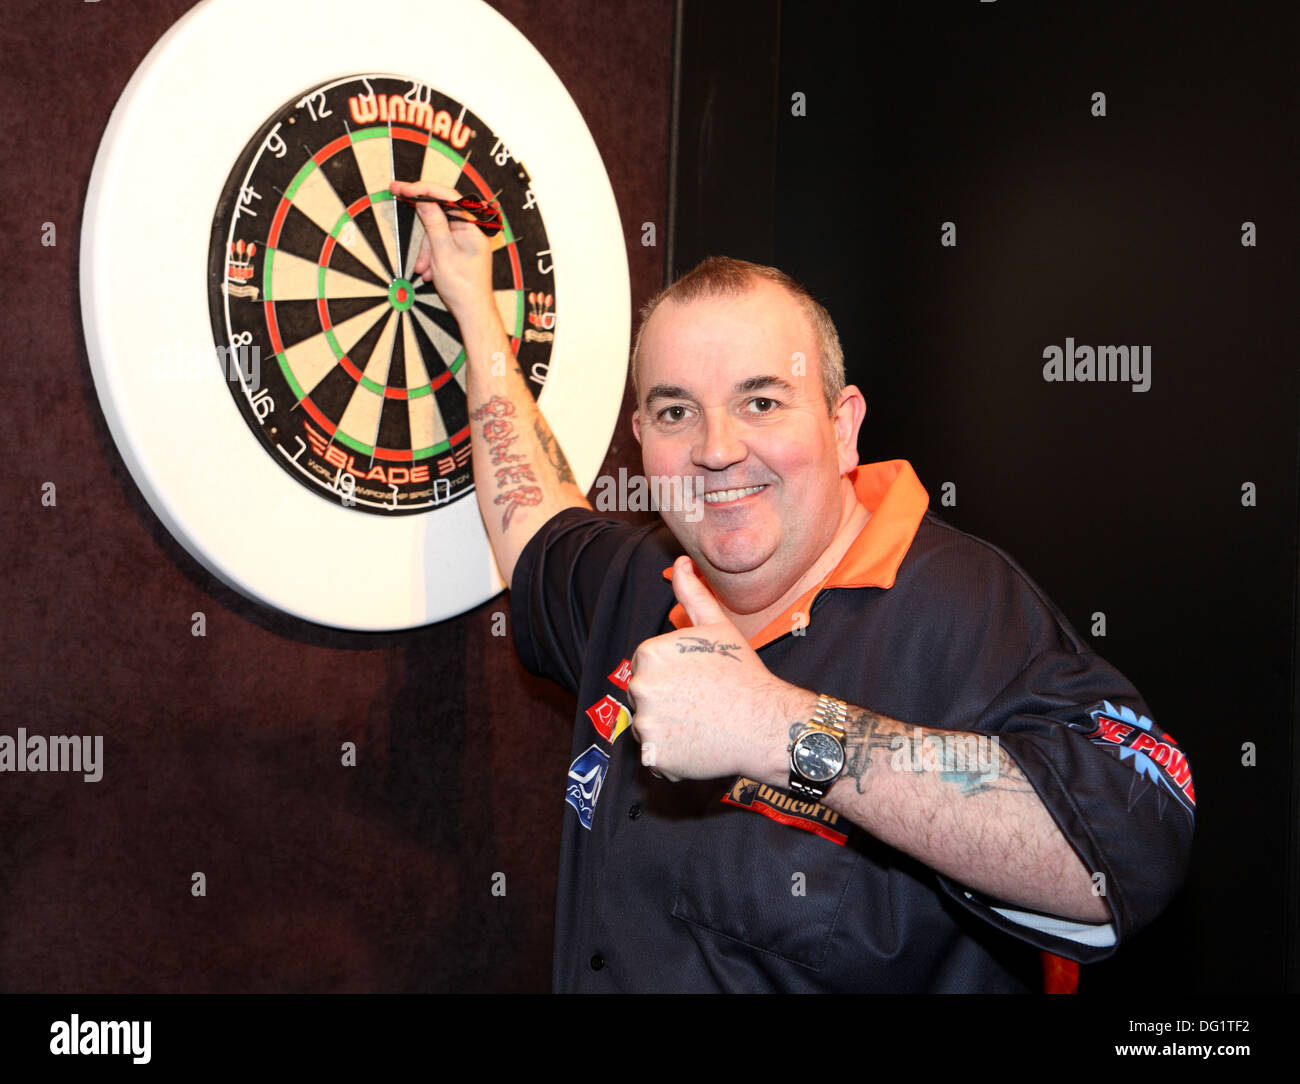 Phil taylor darts player Stock Photo - Alamy